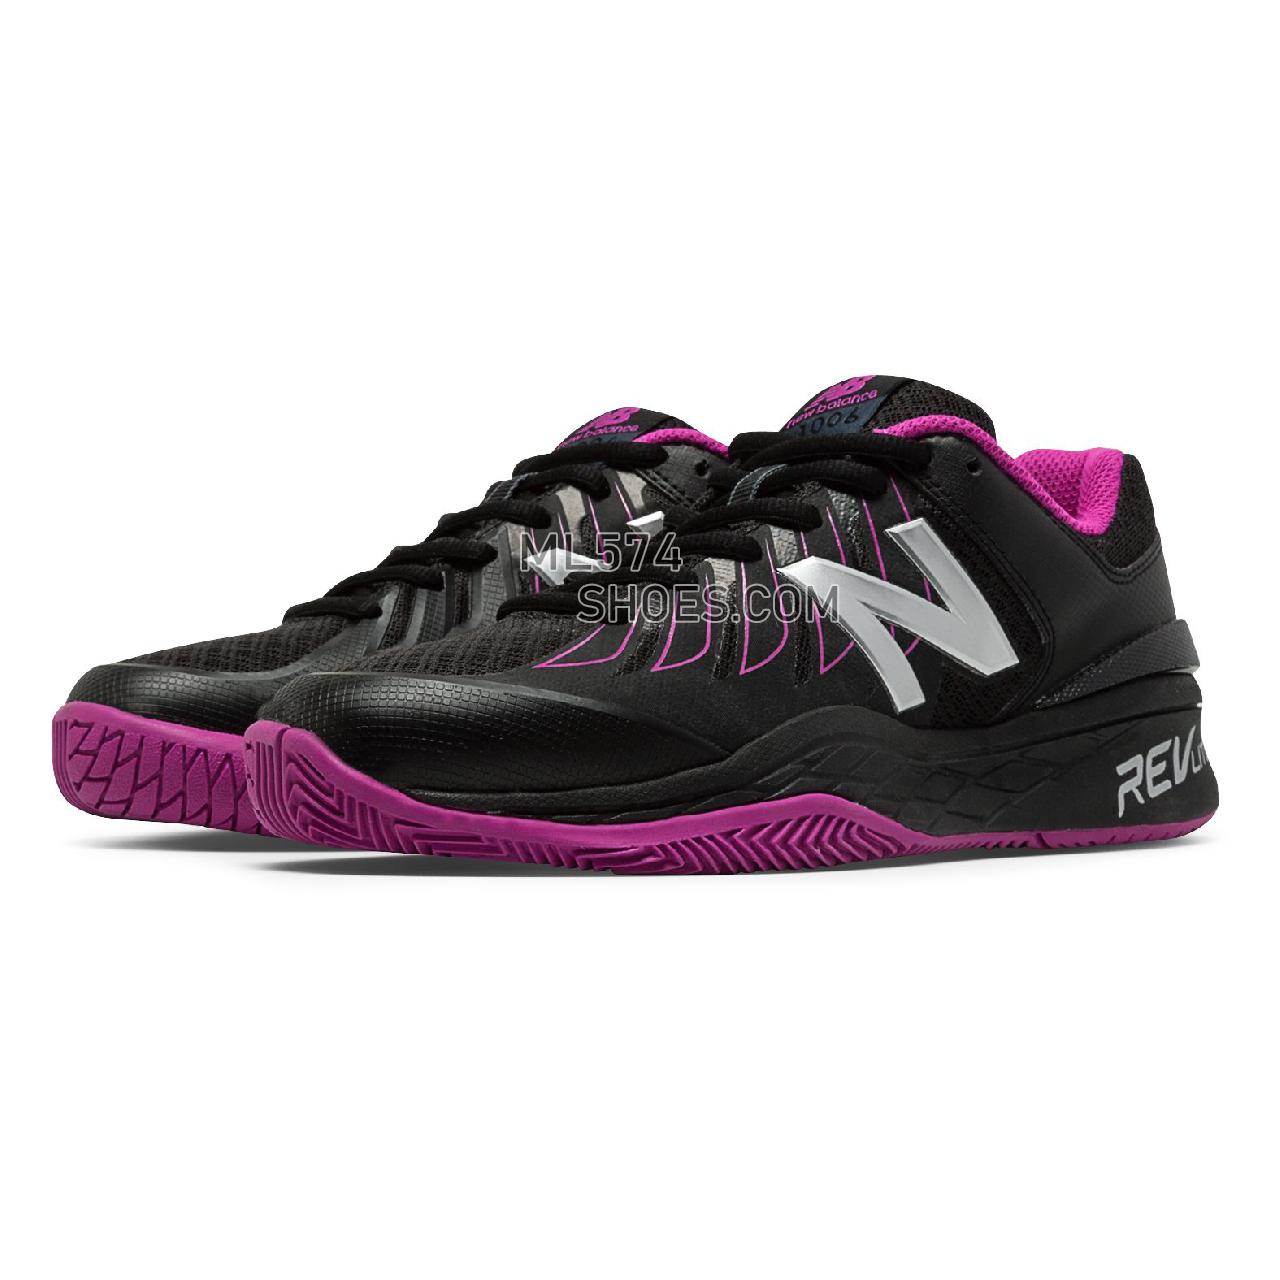 New Balance New Balance 1006 - Women's 1006 - Tennis / Court Black with Pink Zing - WC1006WR